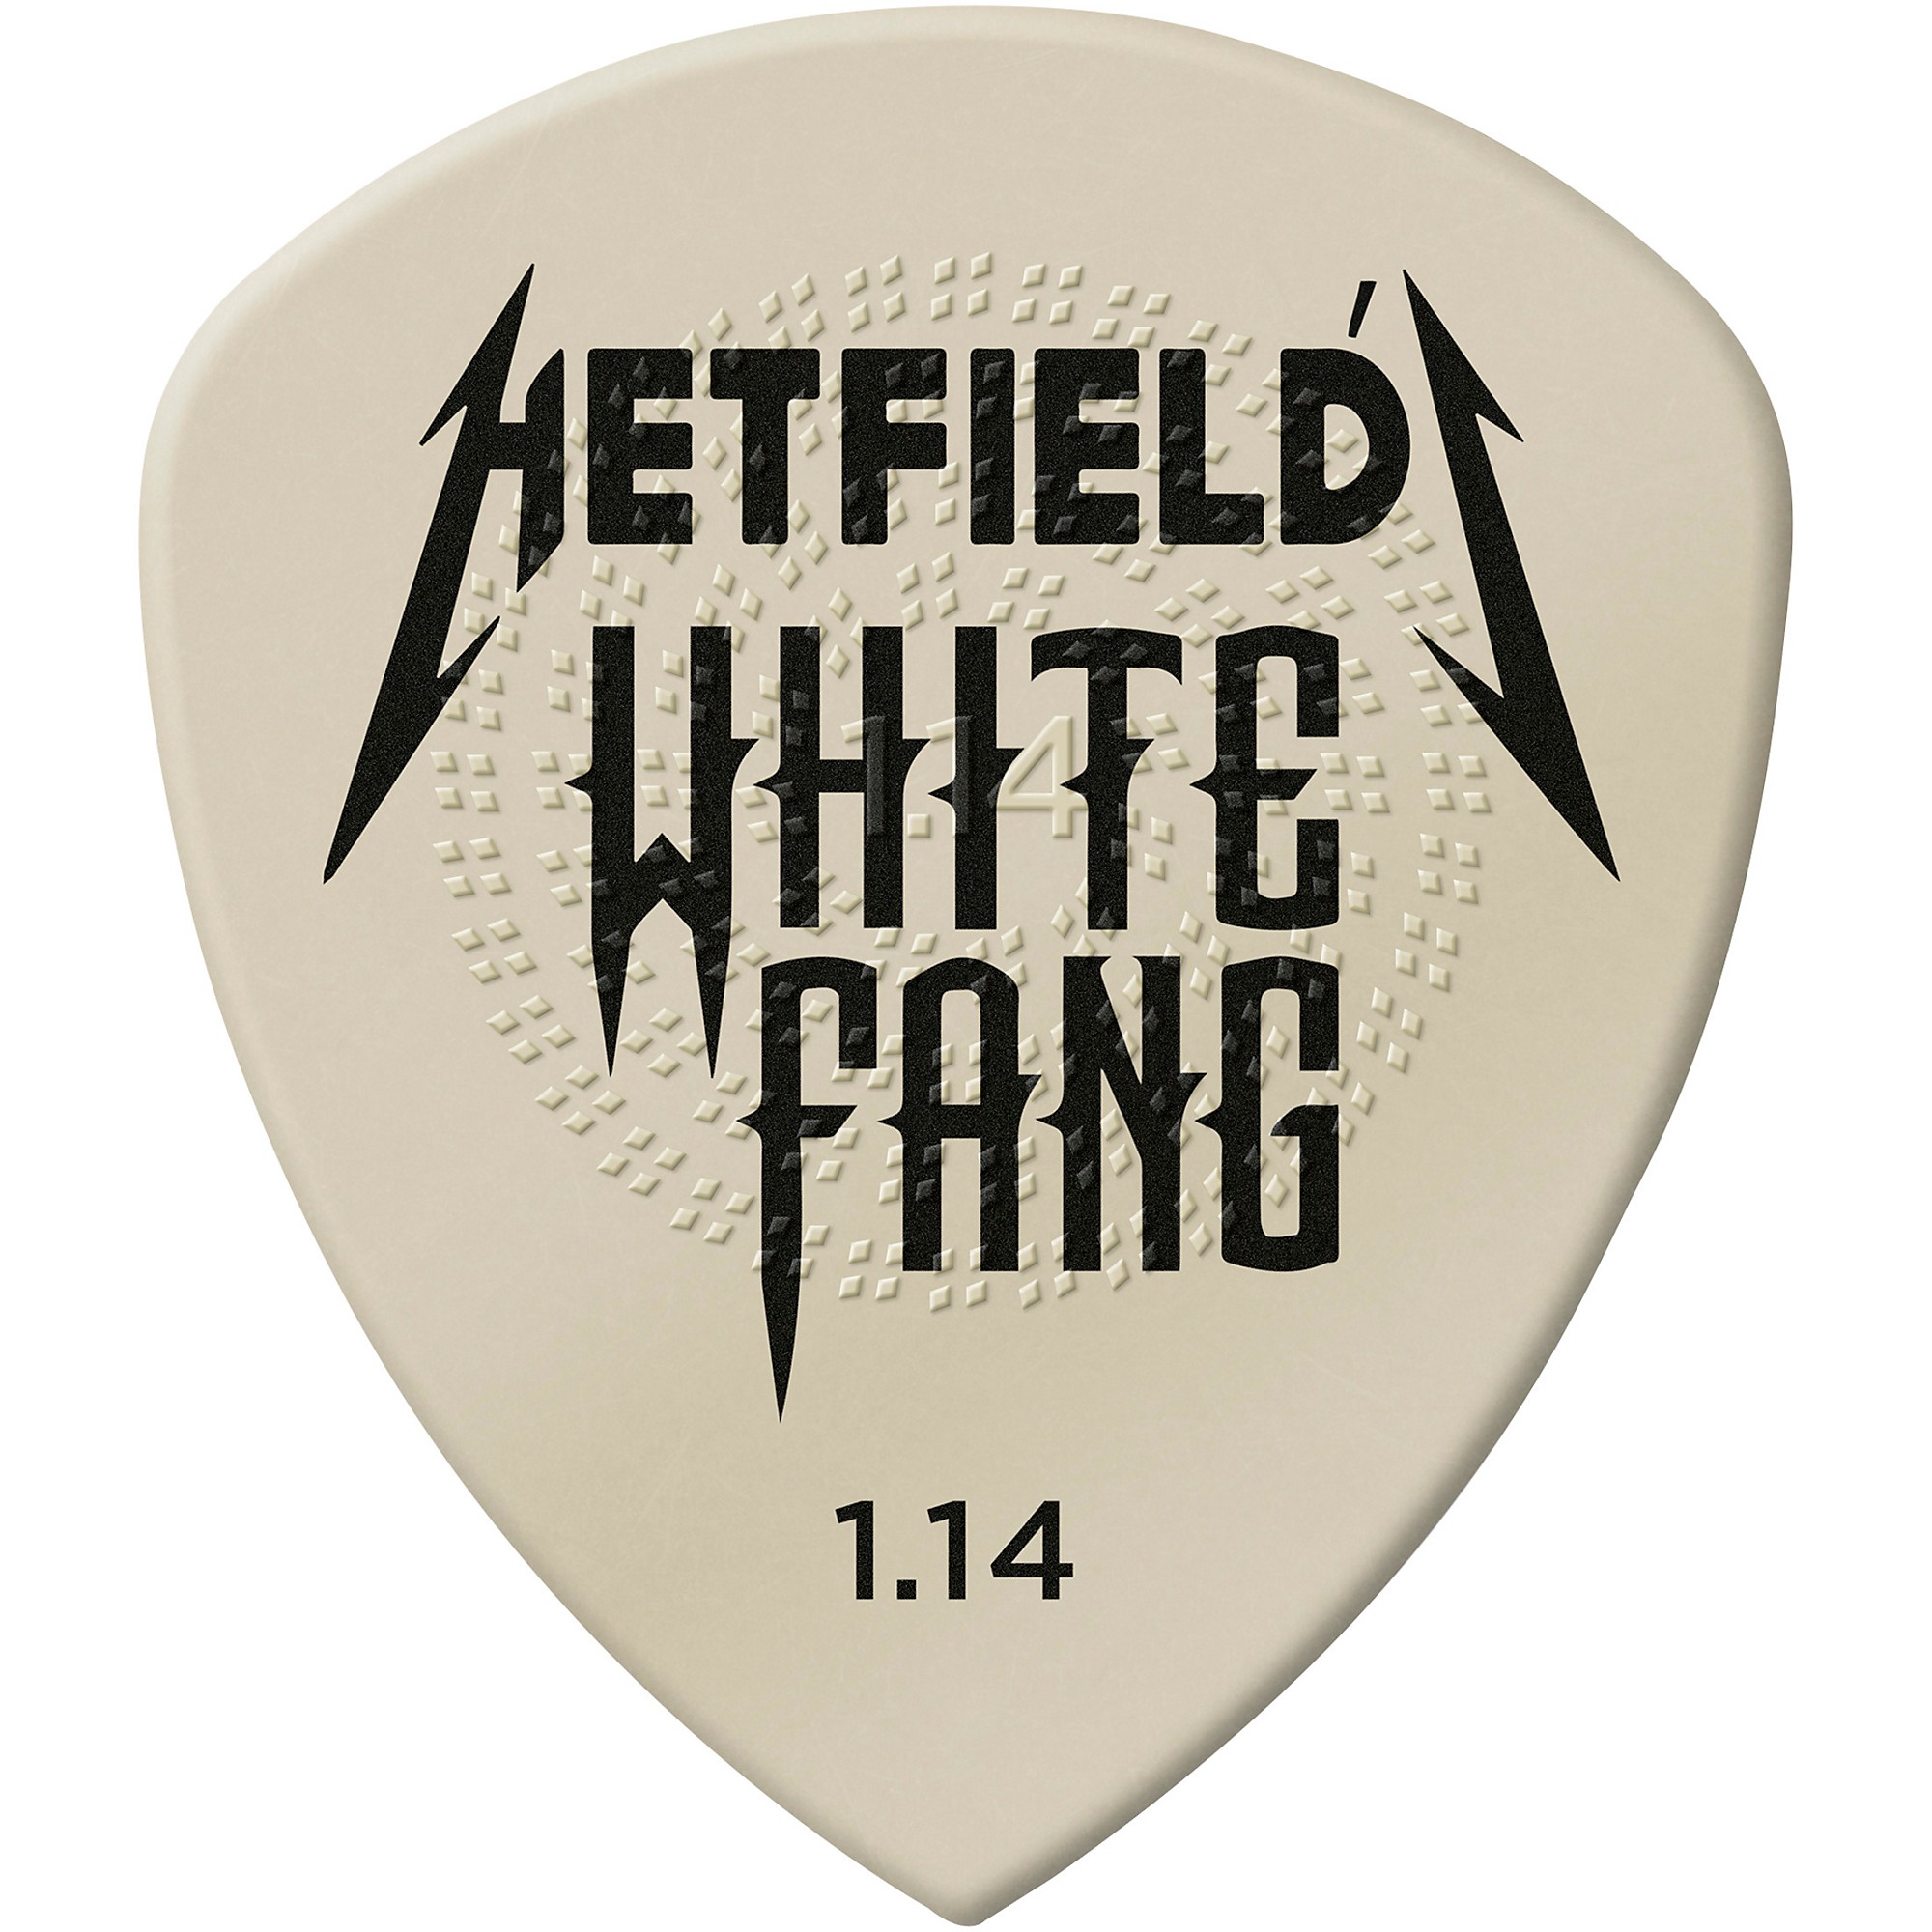 Dunlop White Fang James Hetfield Signature Picks | Guitar ...